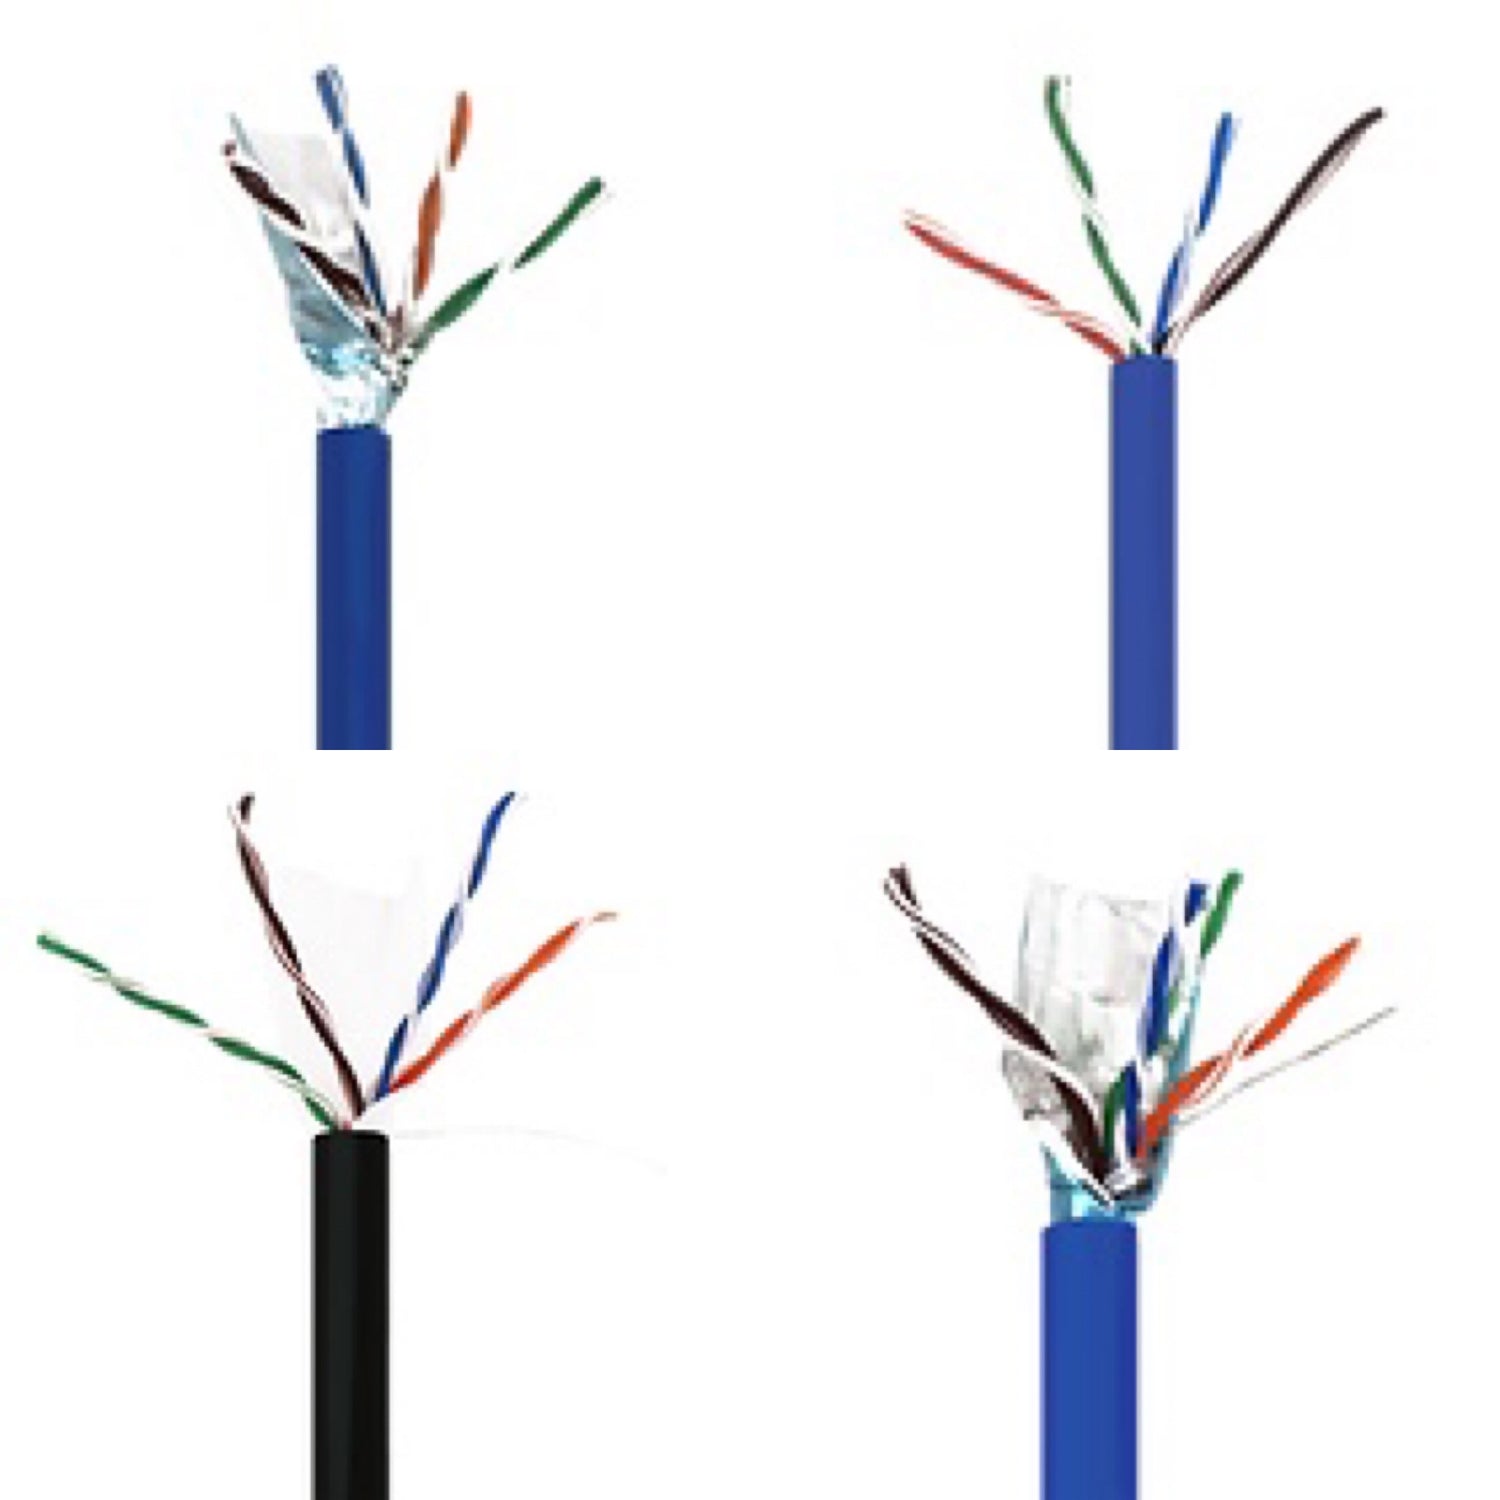 CAT5E Cables